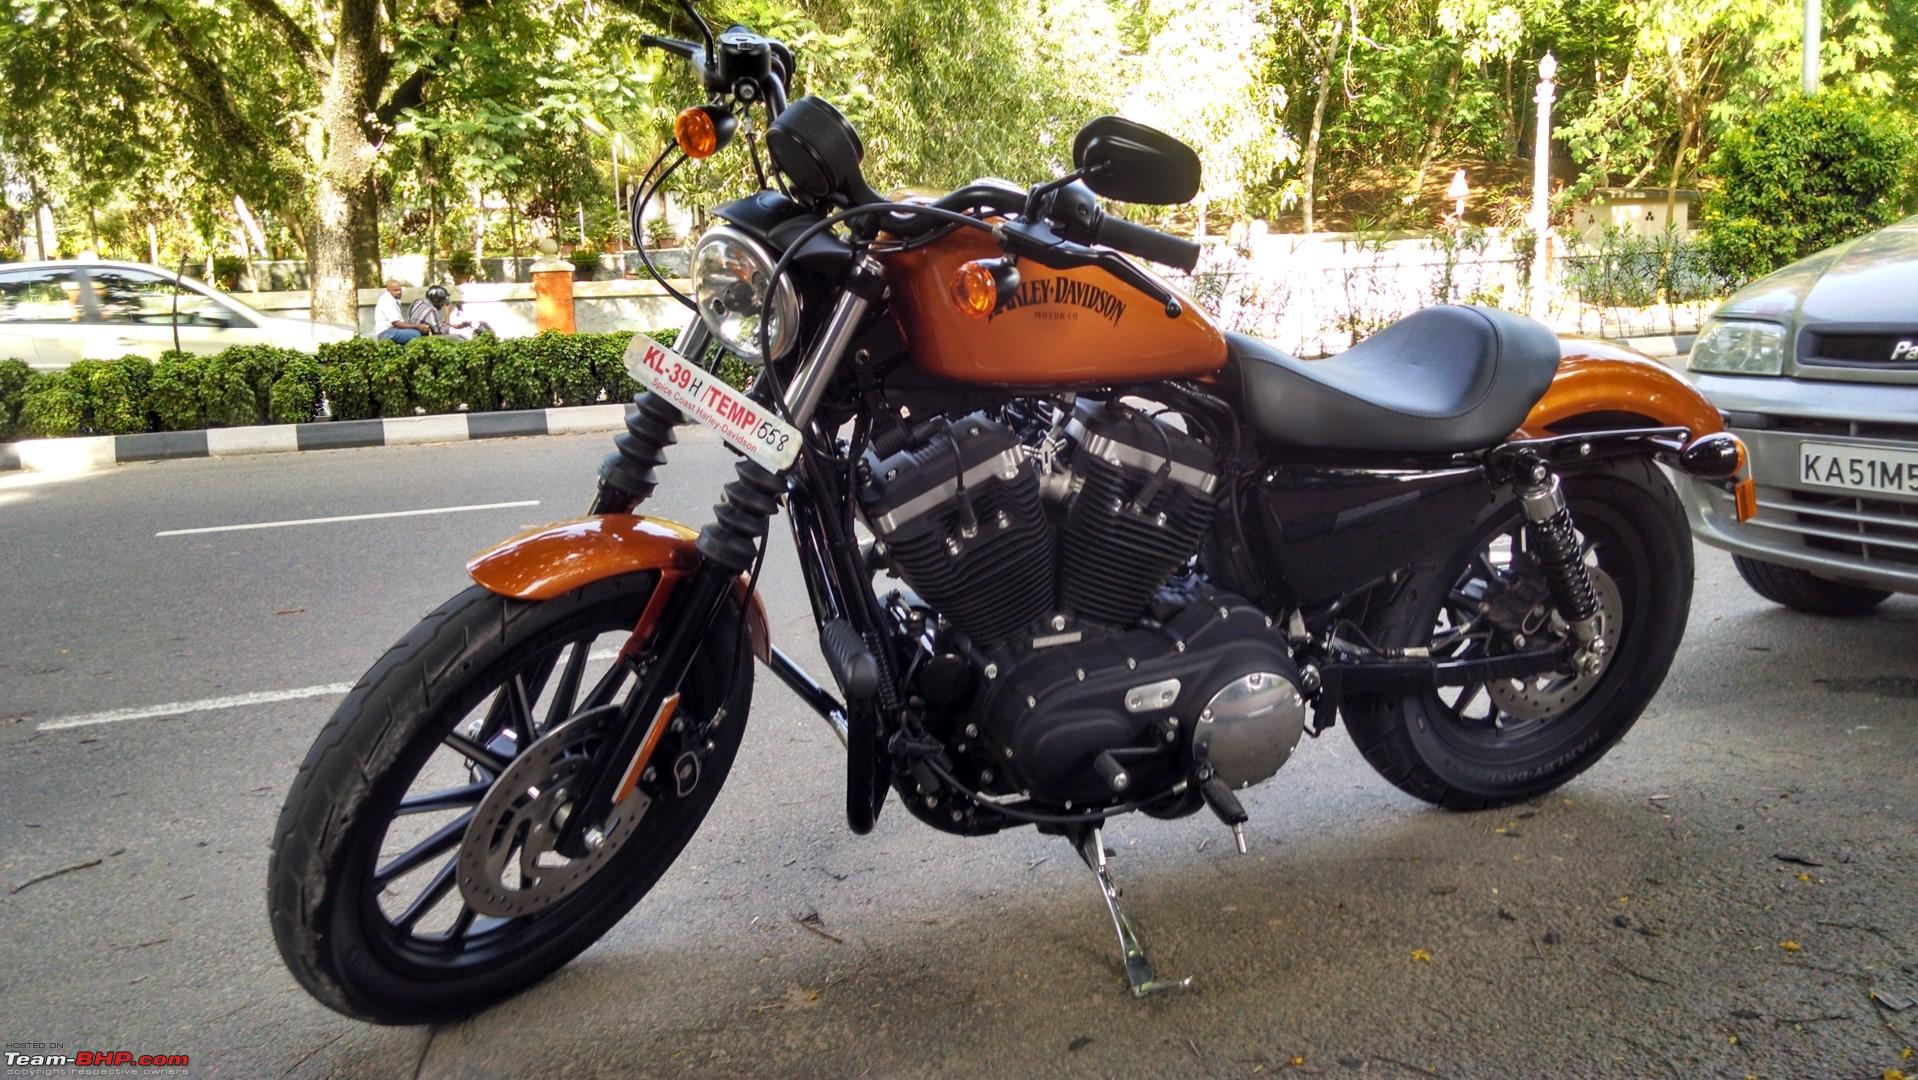 Harley Davidson Iron 883 Price In Kerala Promotion Off64